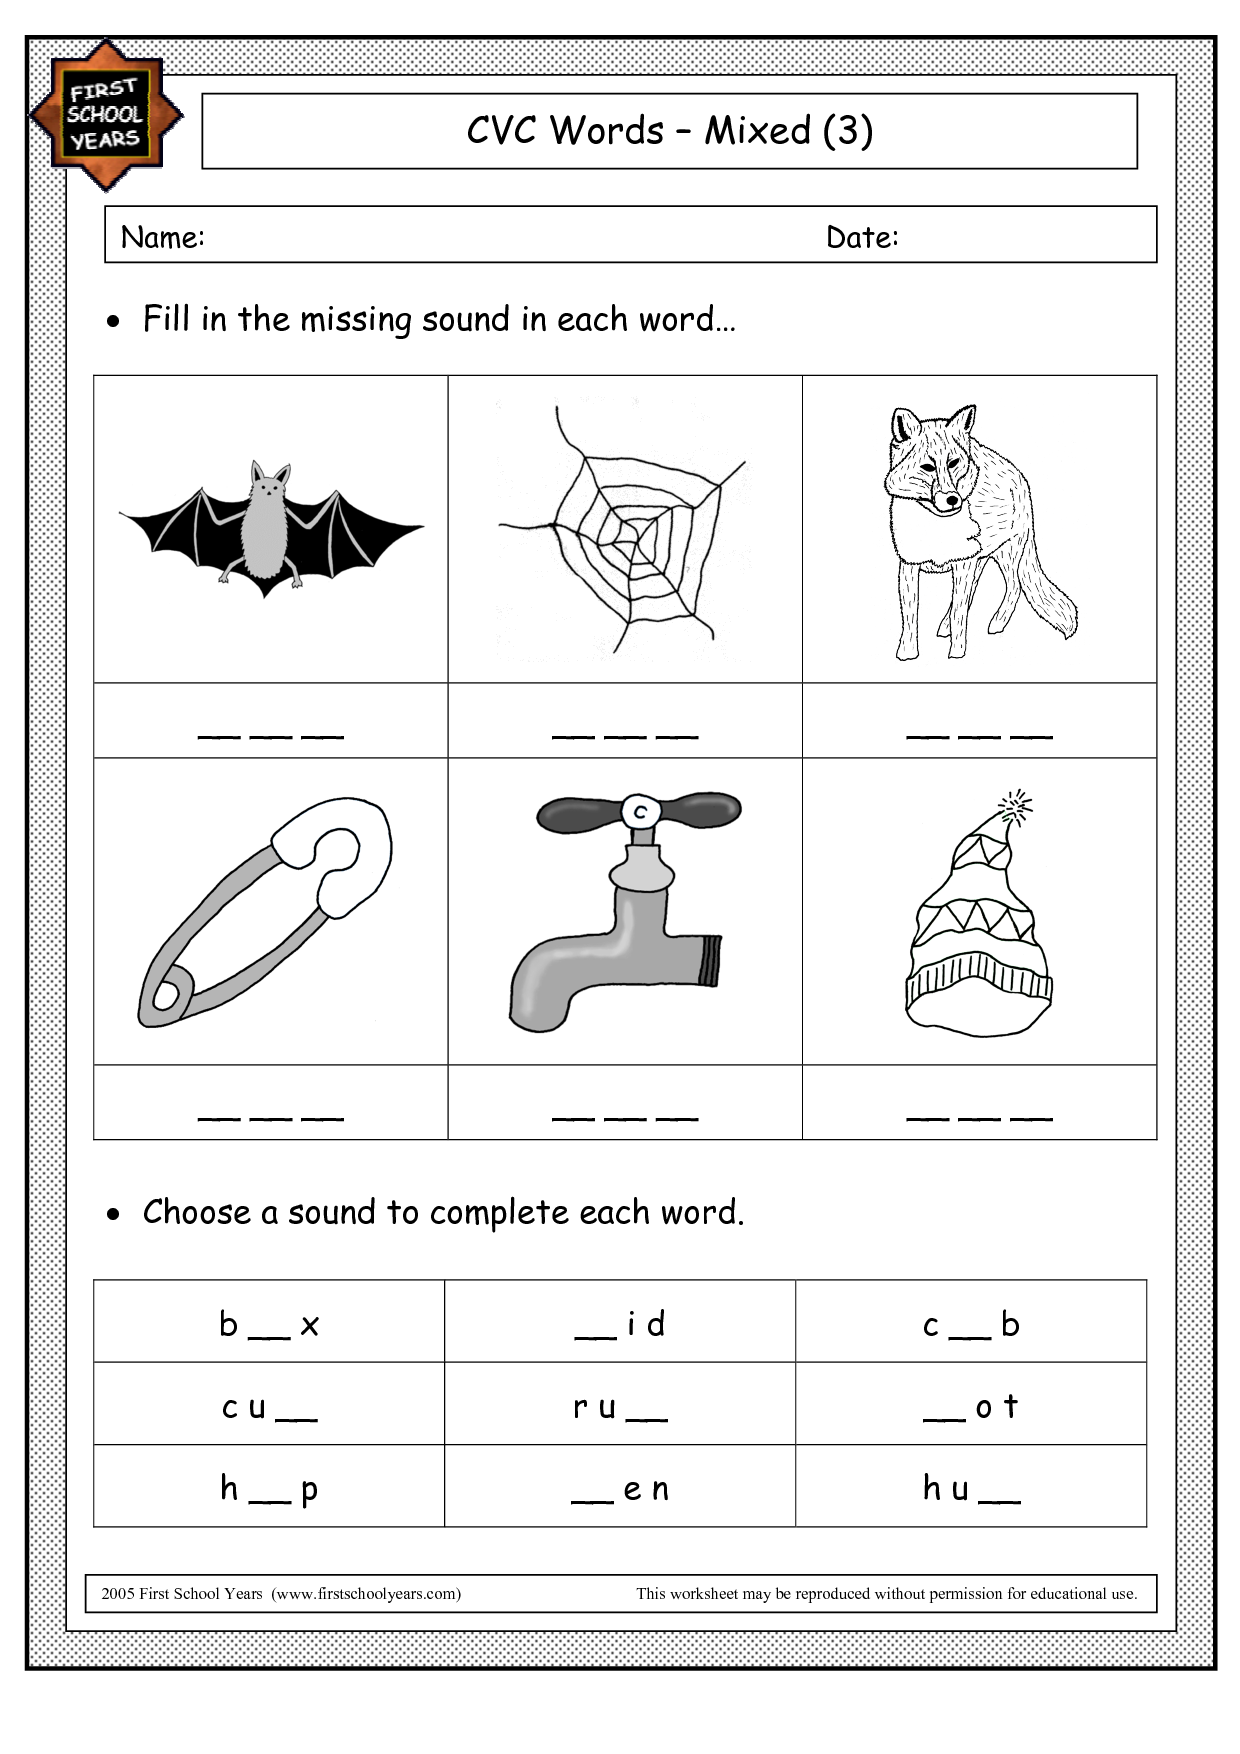 cvc-worksheets-for-kindergarten-made-by-teachers